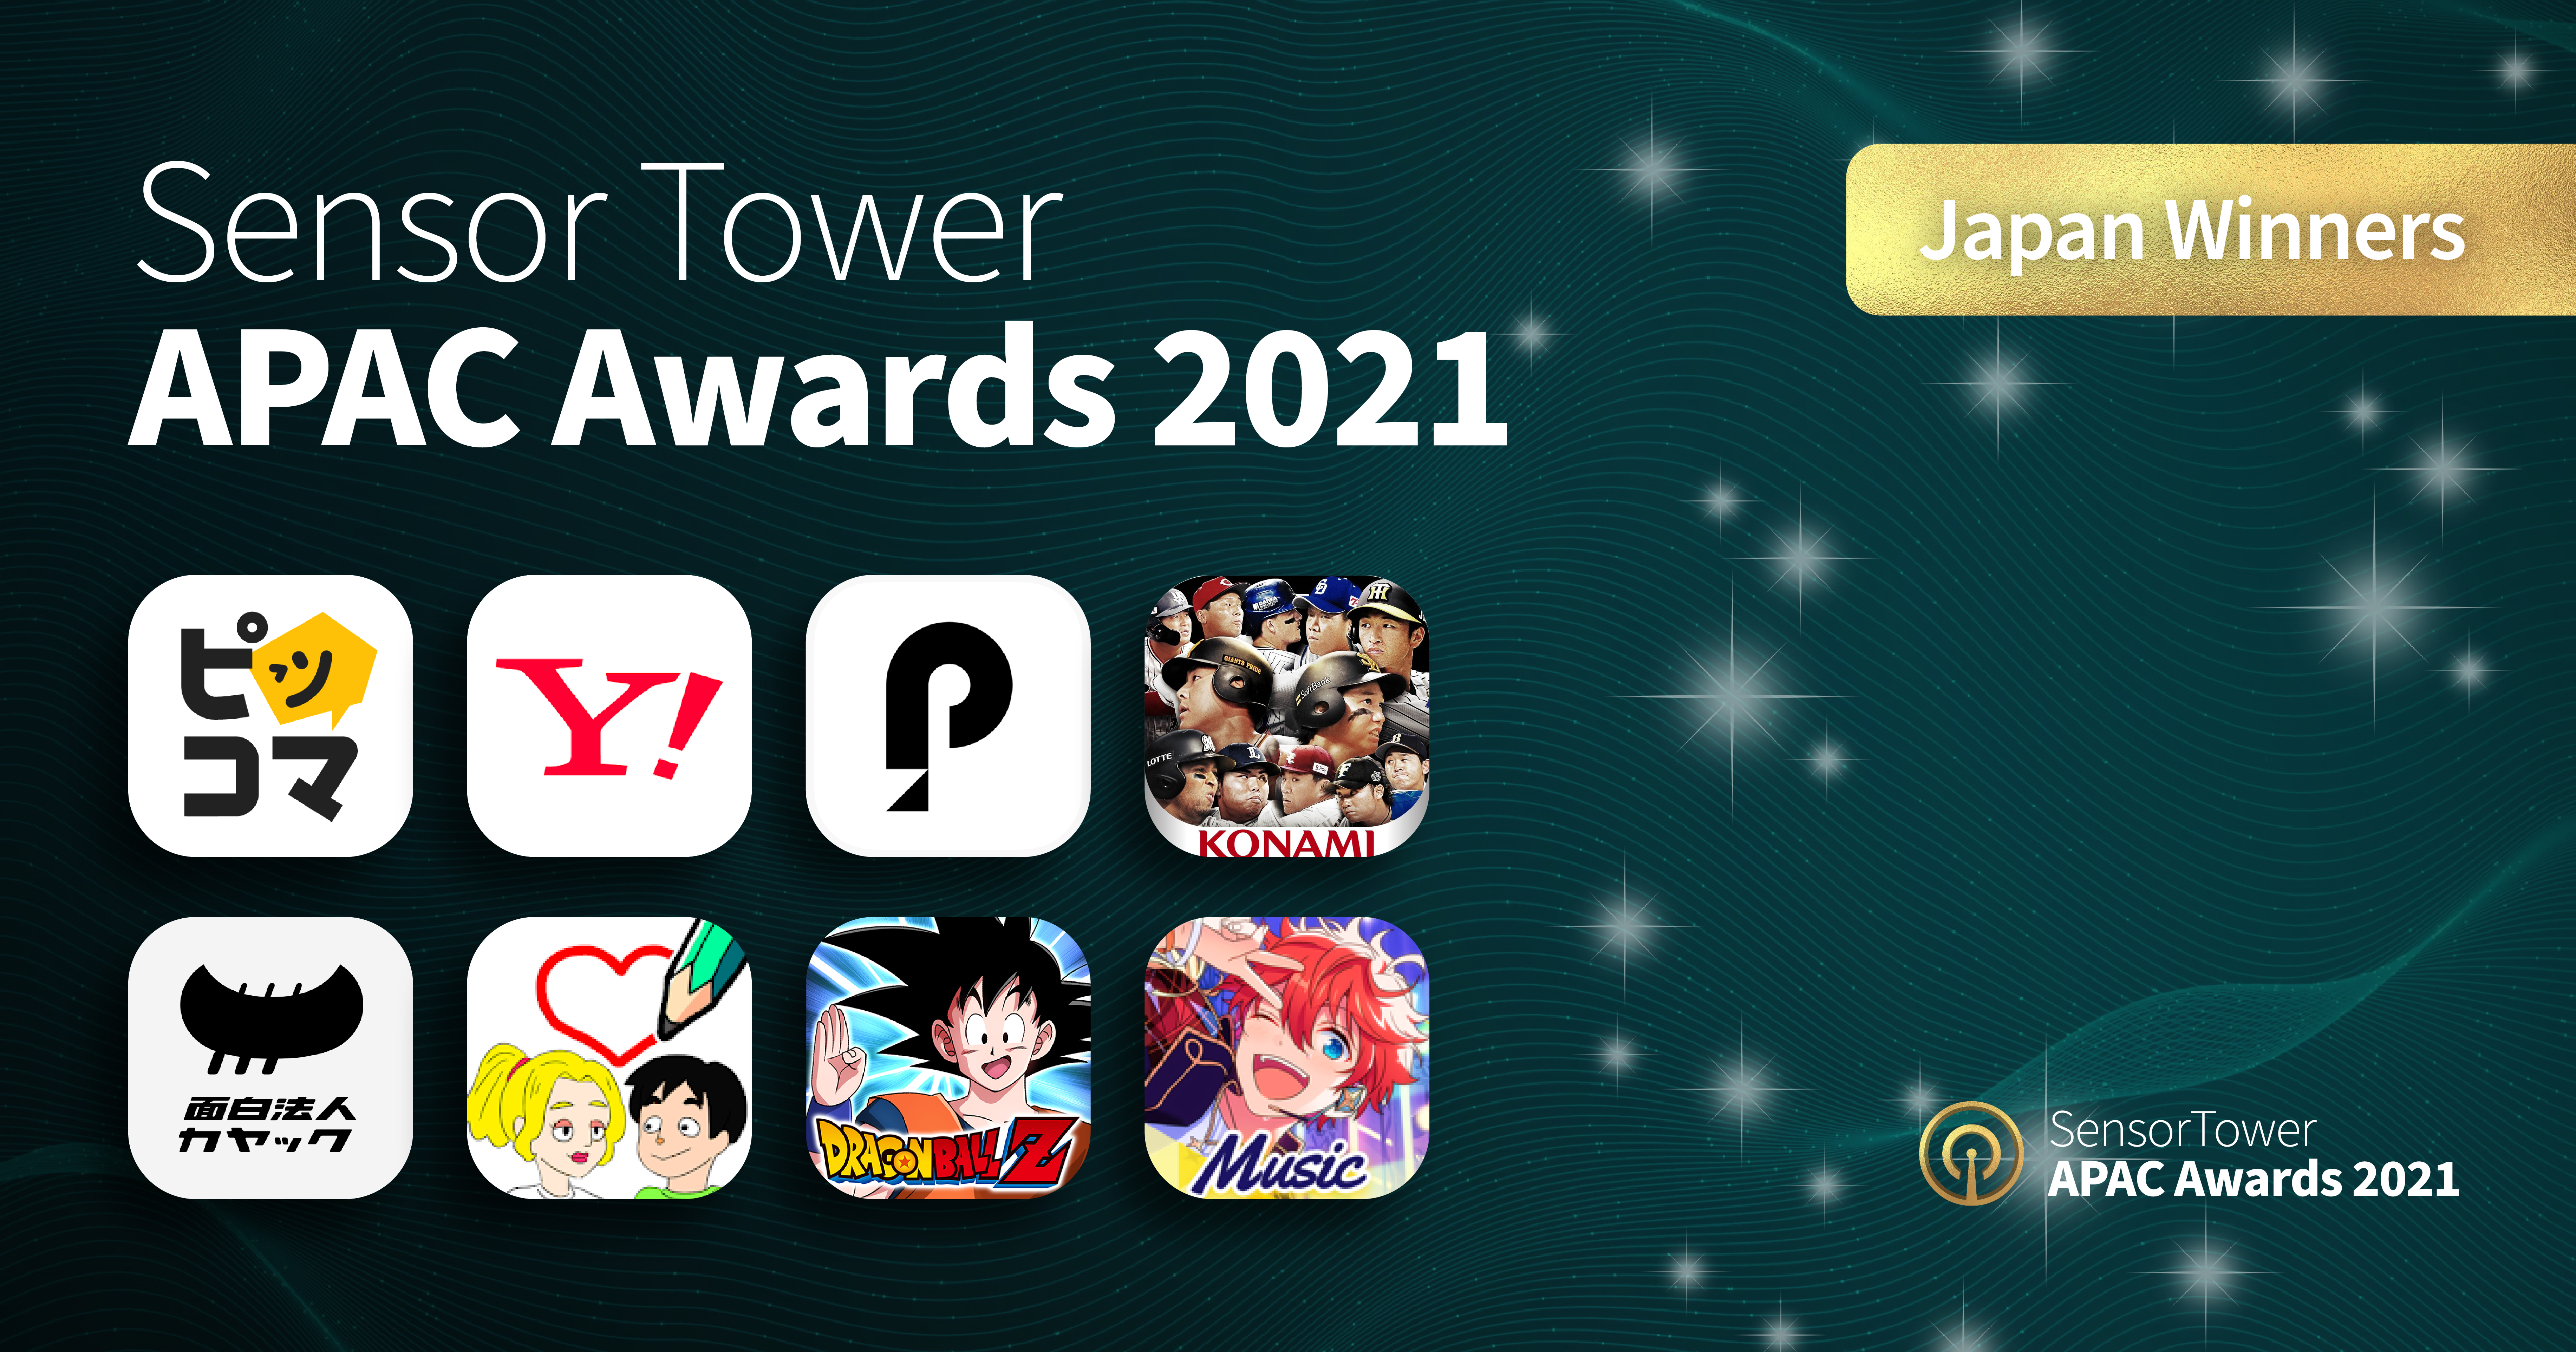 APAC Awards 2021 App Japan